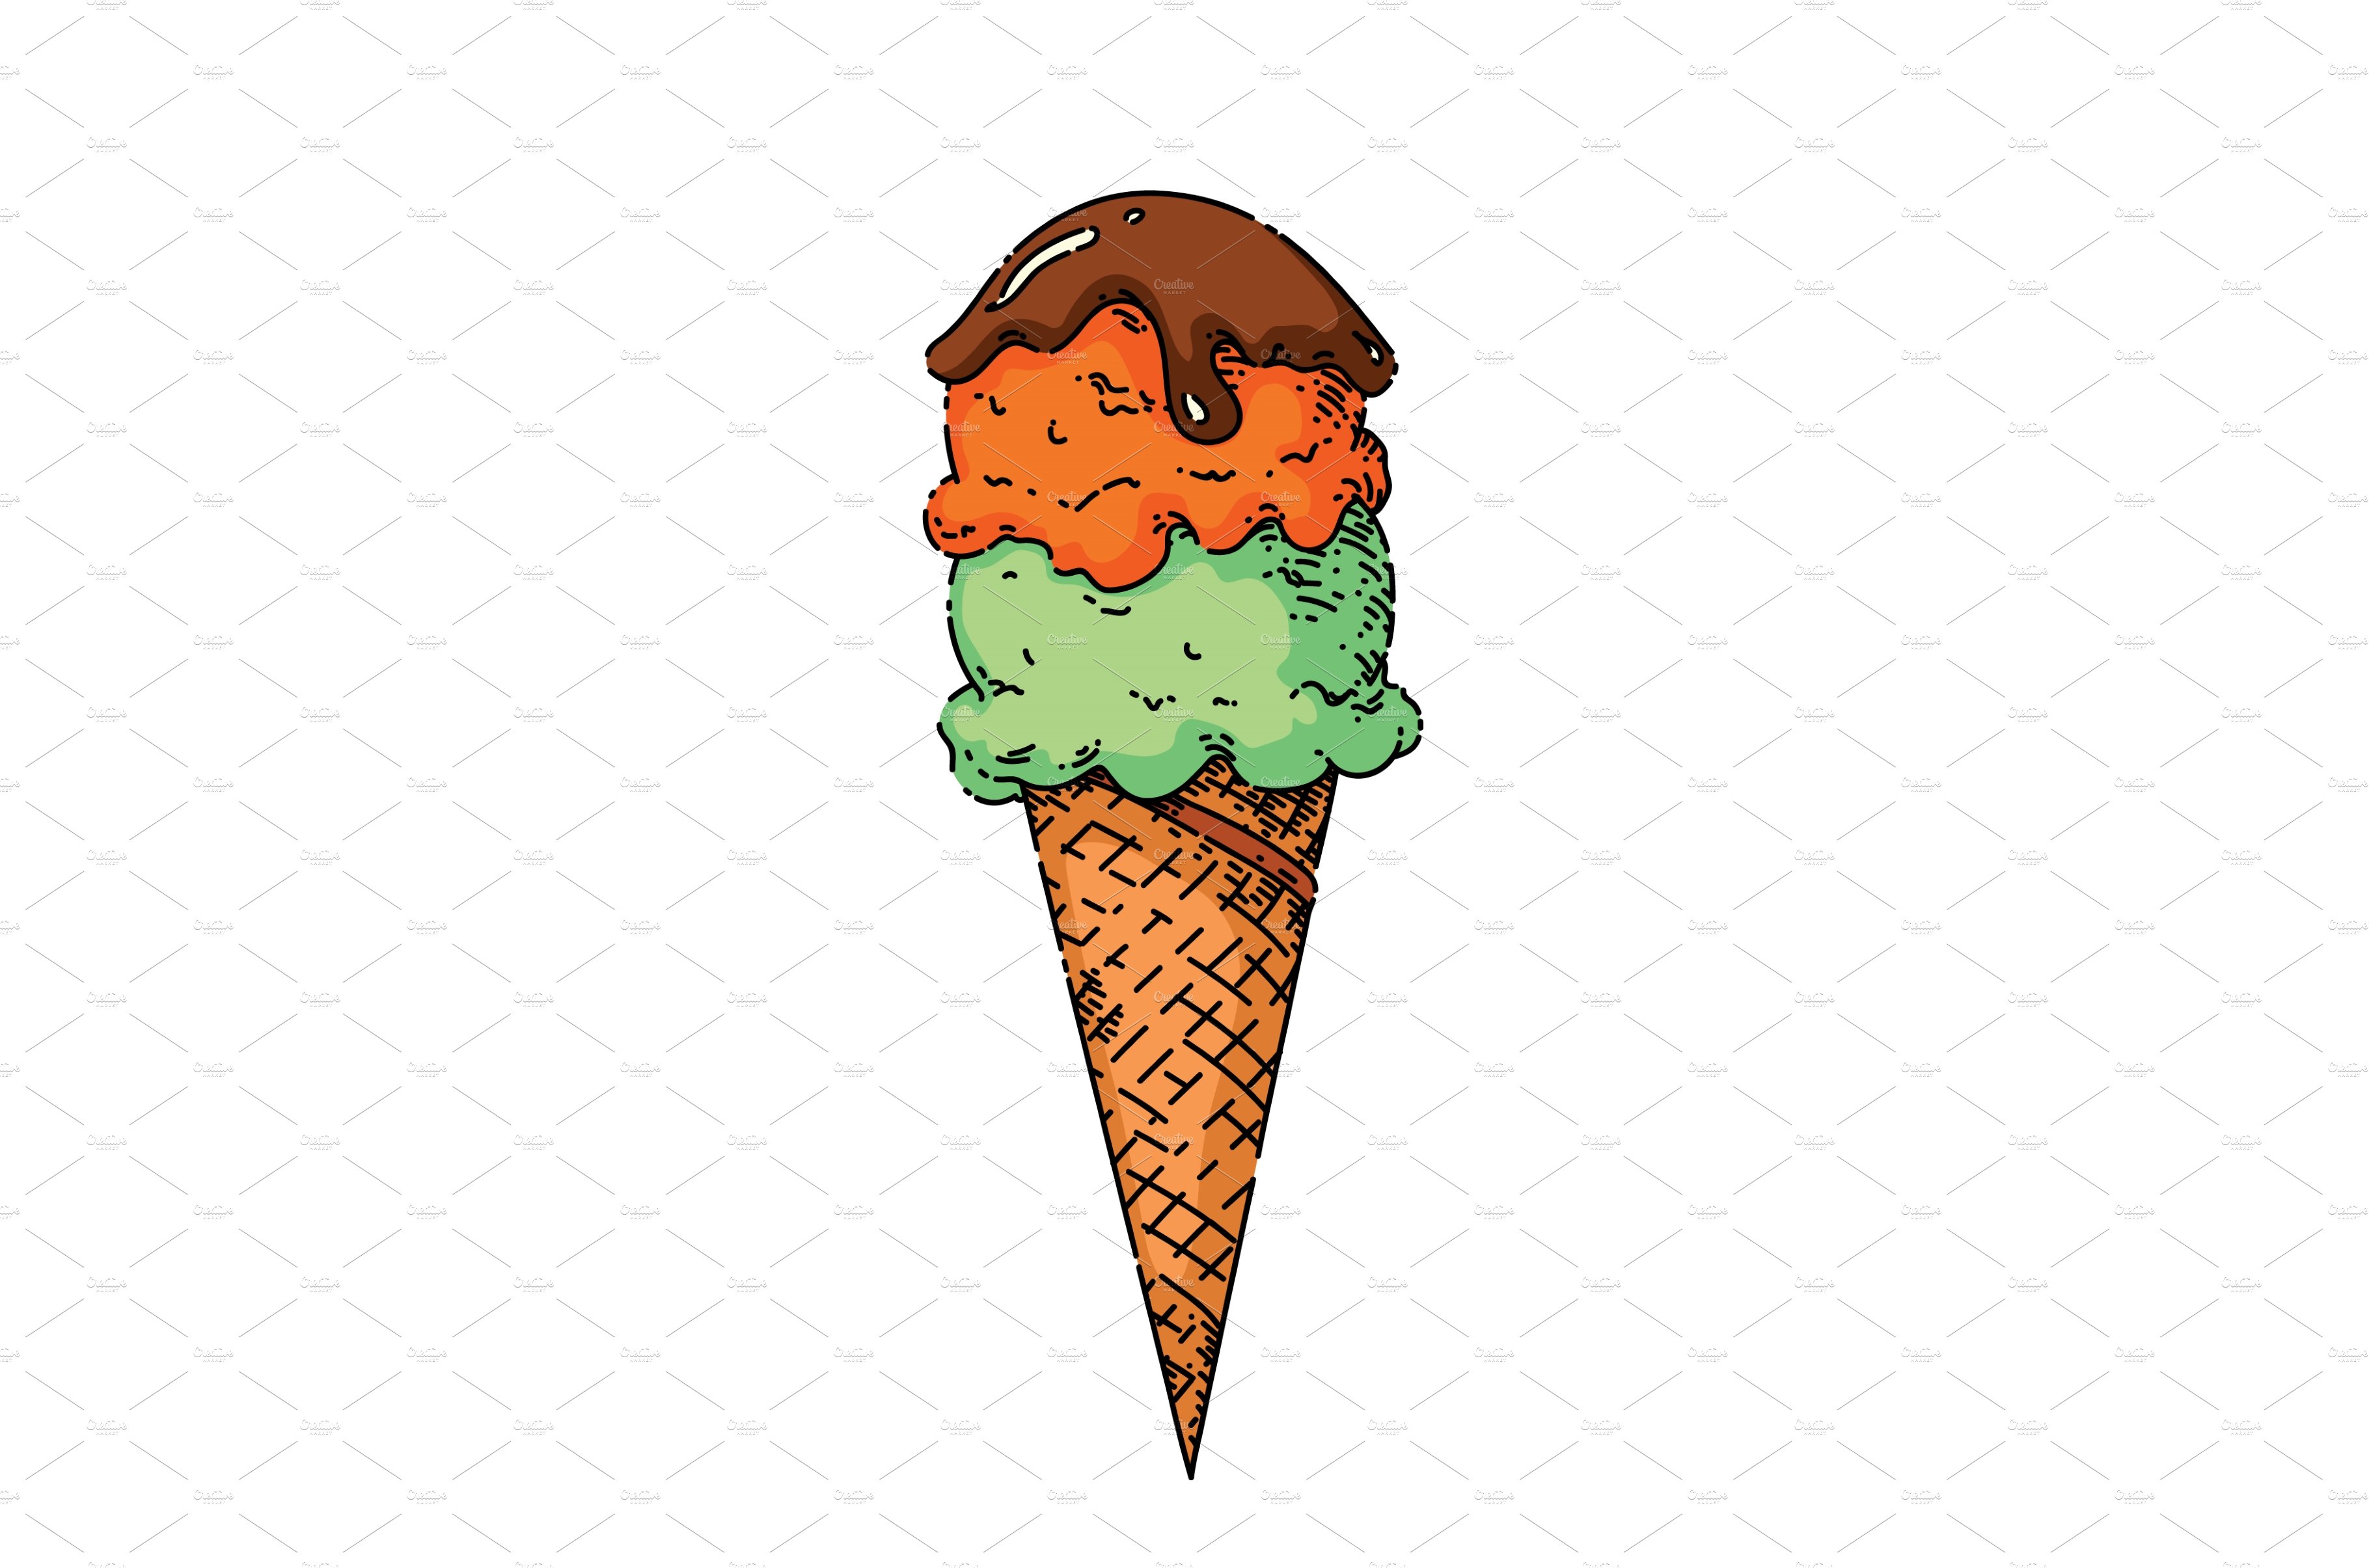 Vanilla ice cream in a waffle cone, watercolor drawing